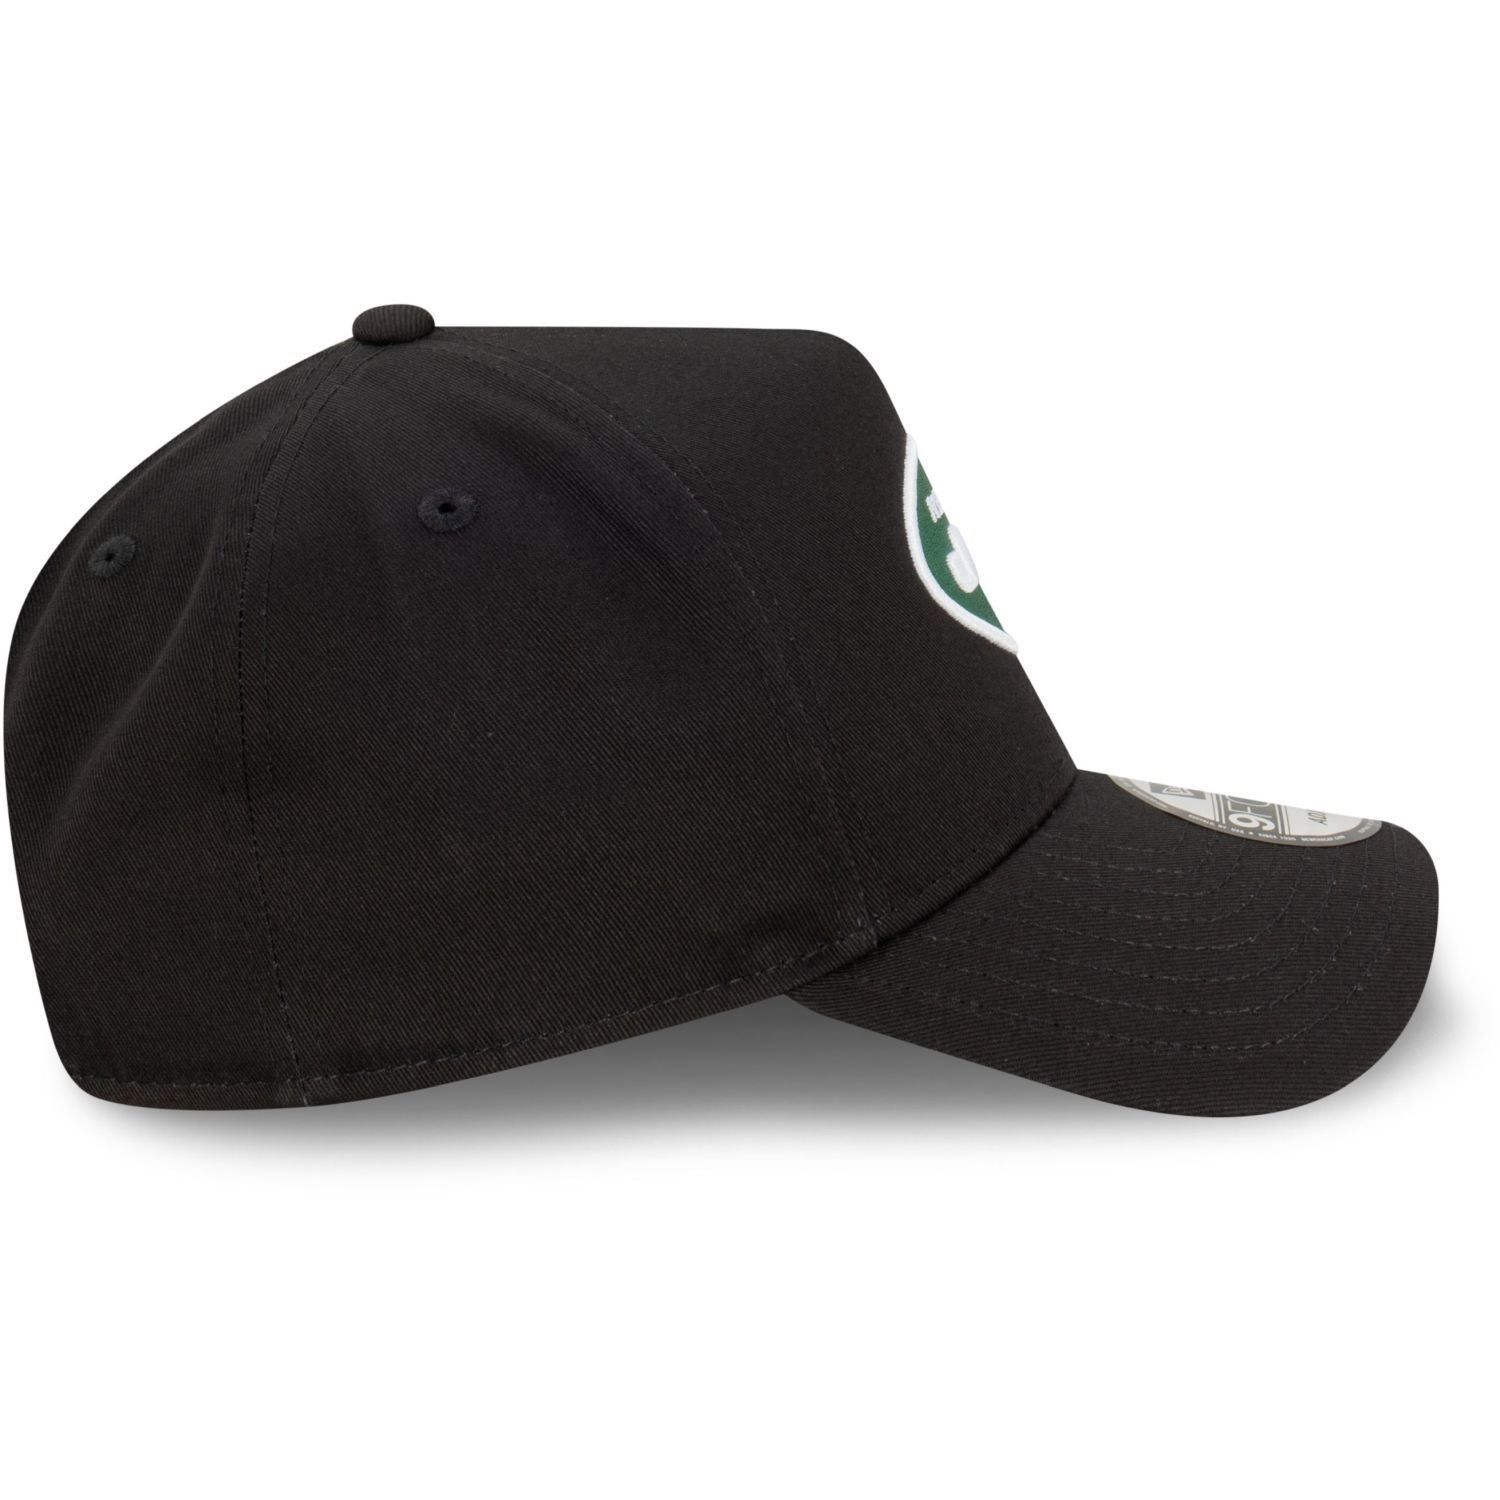 New York Jets NFL Evergreen Black 9Forty Adjustable A-Frame Cap New Era